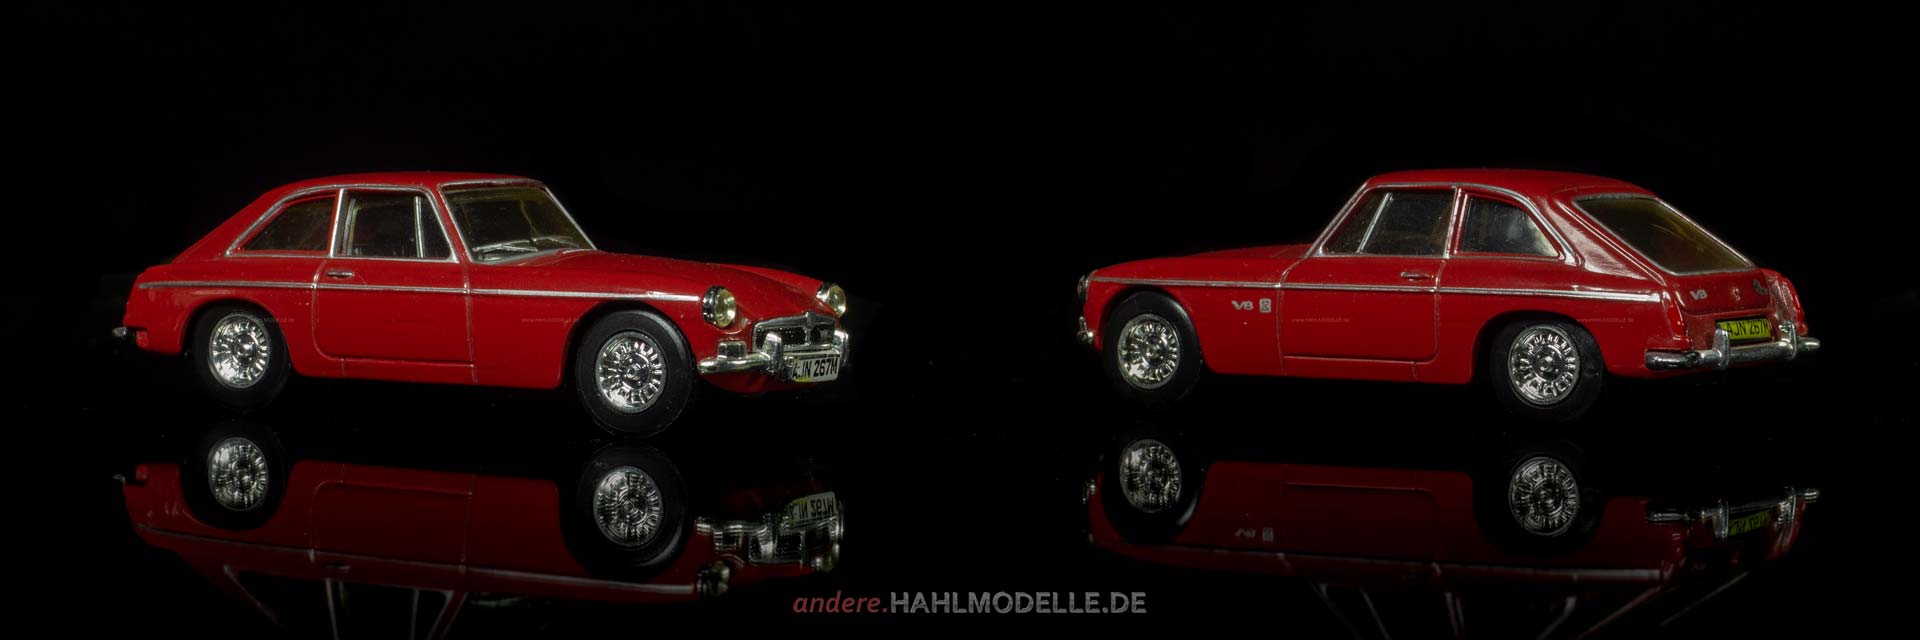 BMC MGB GT V8 | Coupé | Matchbox / Dinky | 1:43 | www.andere.hahlmodelle.de